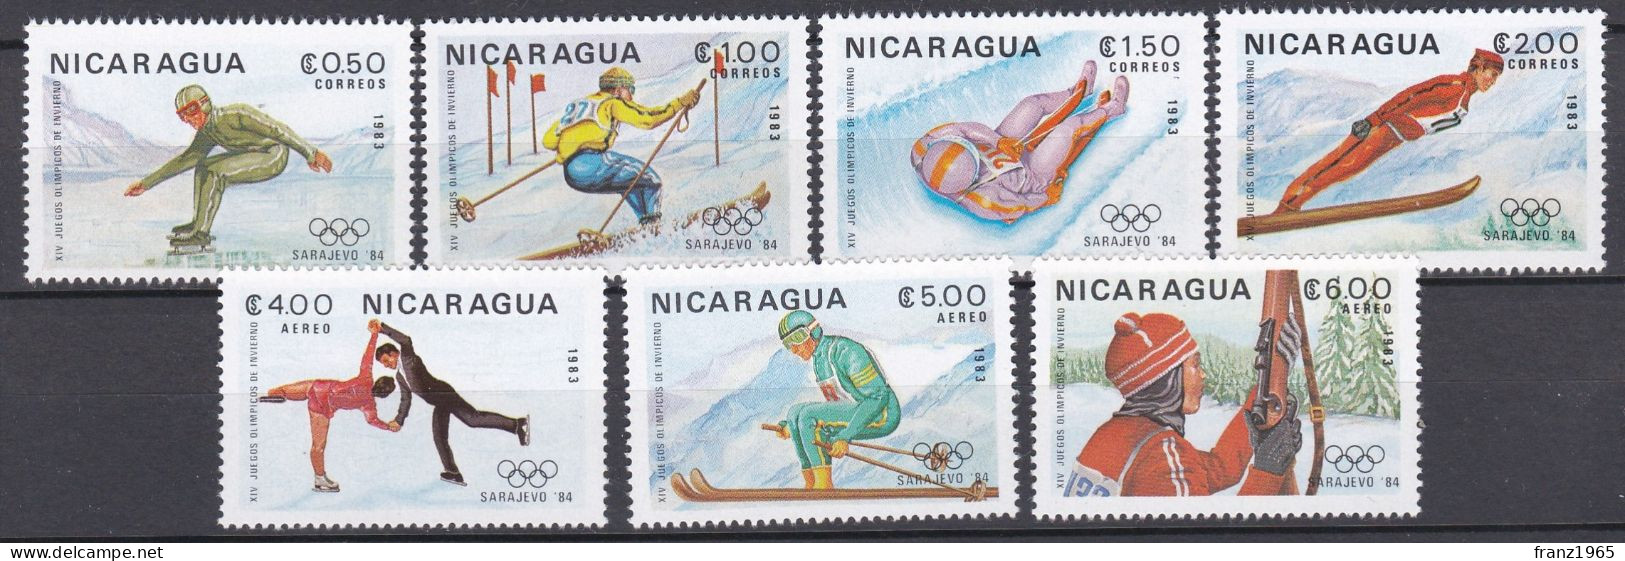 Nicaragua - Olympics Games 1984 - Hiver 1984: Sarajevo